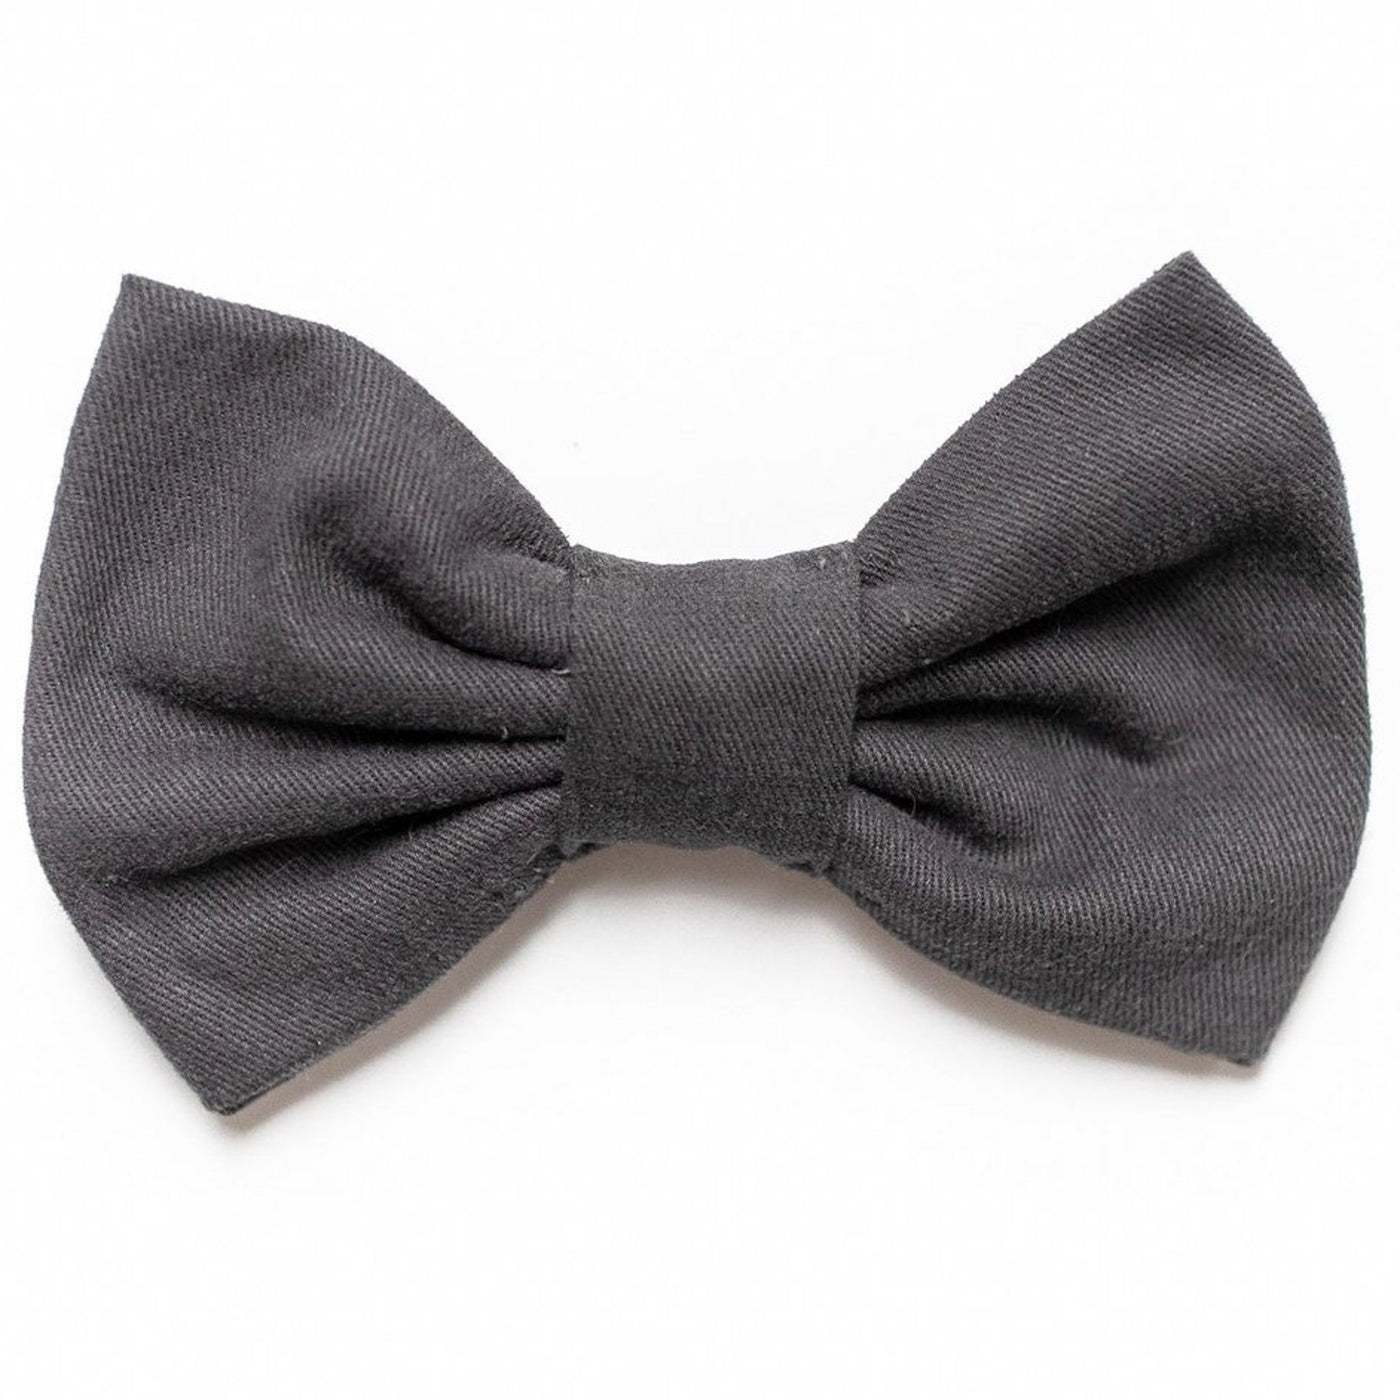 Classic dog bow tie dark gray